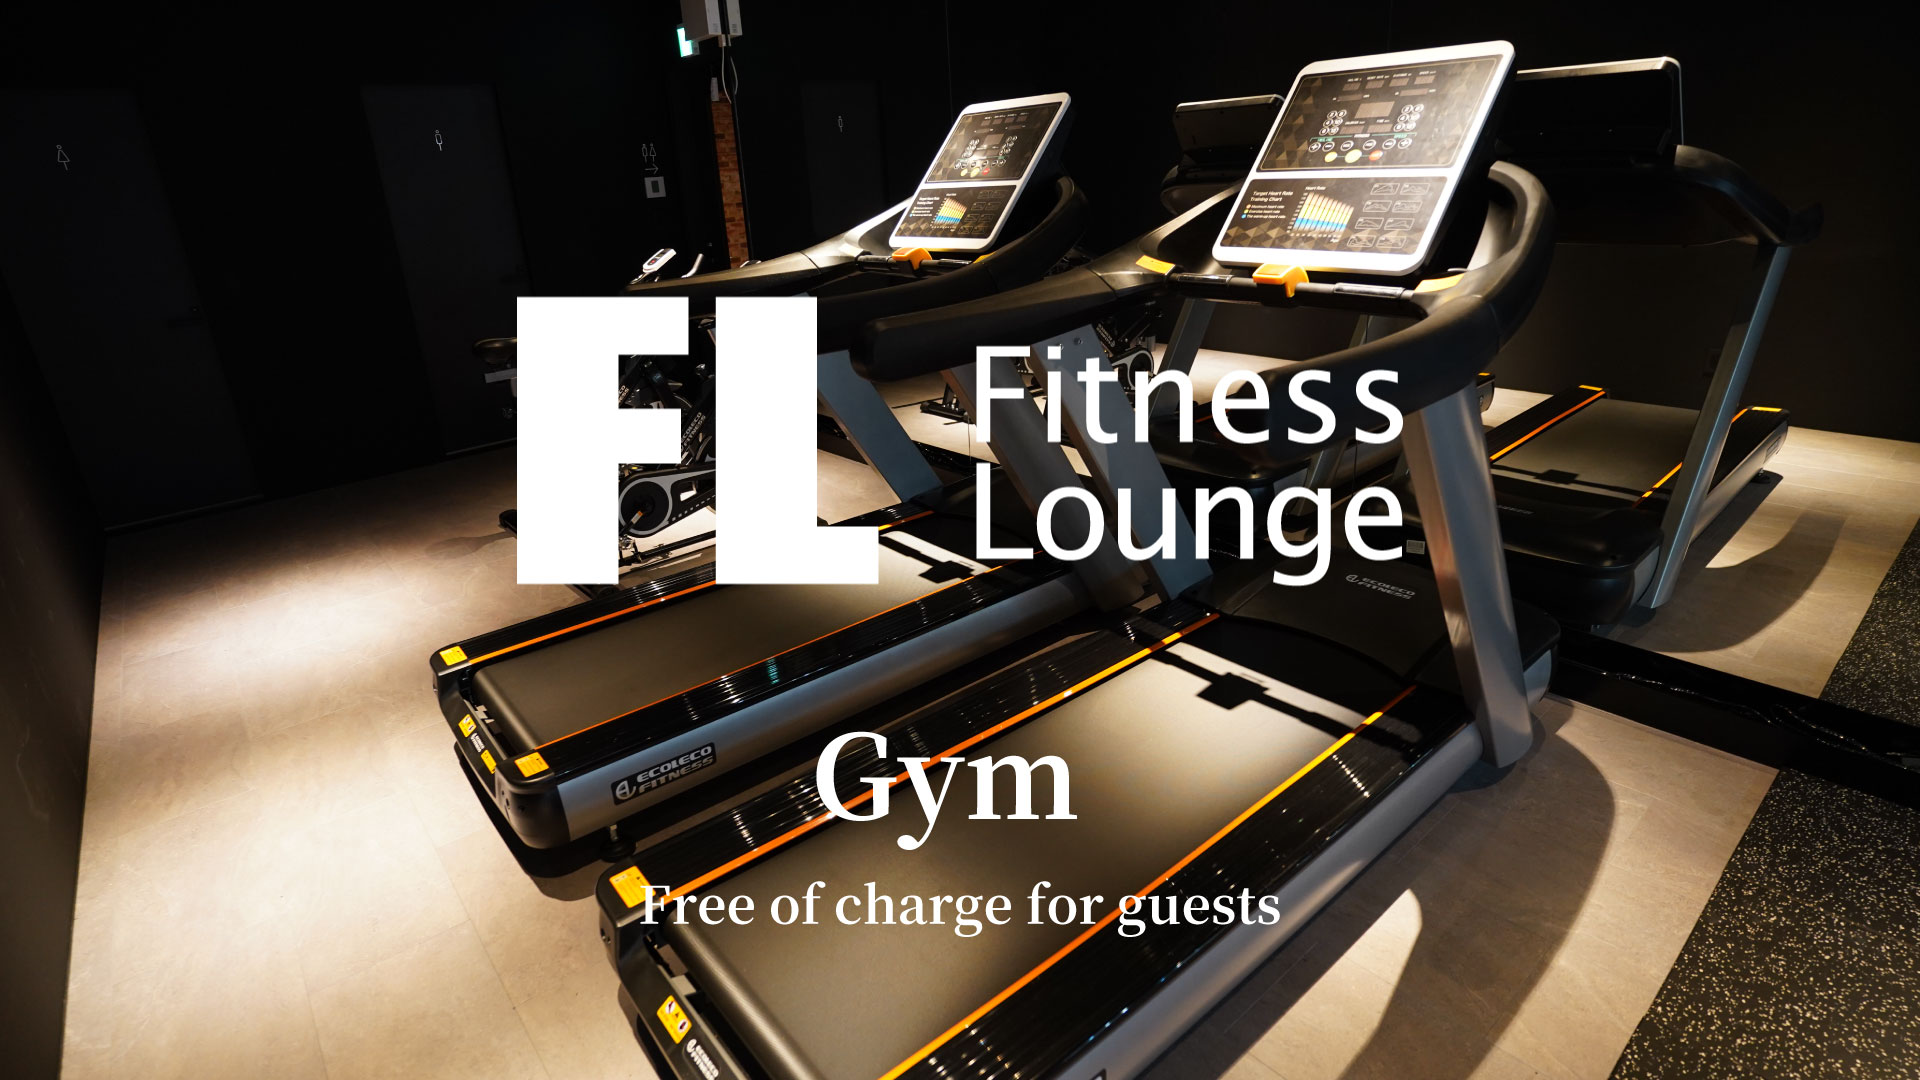 Fitness Lounge